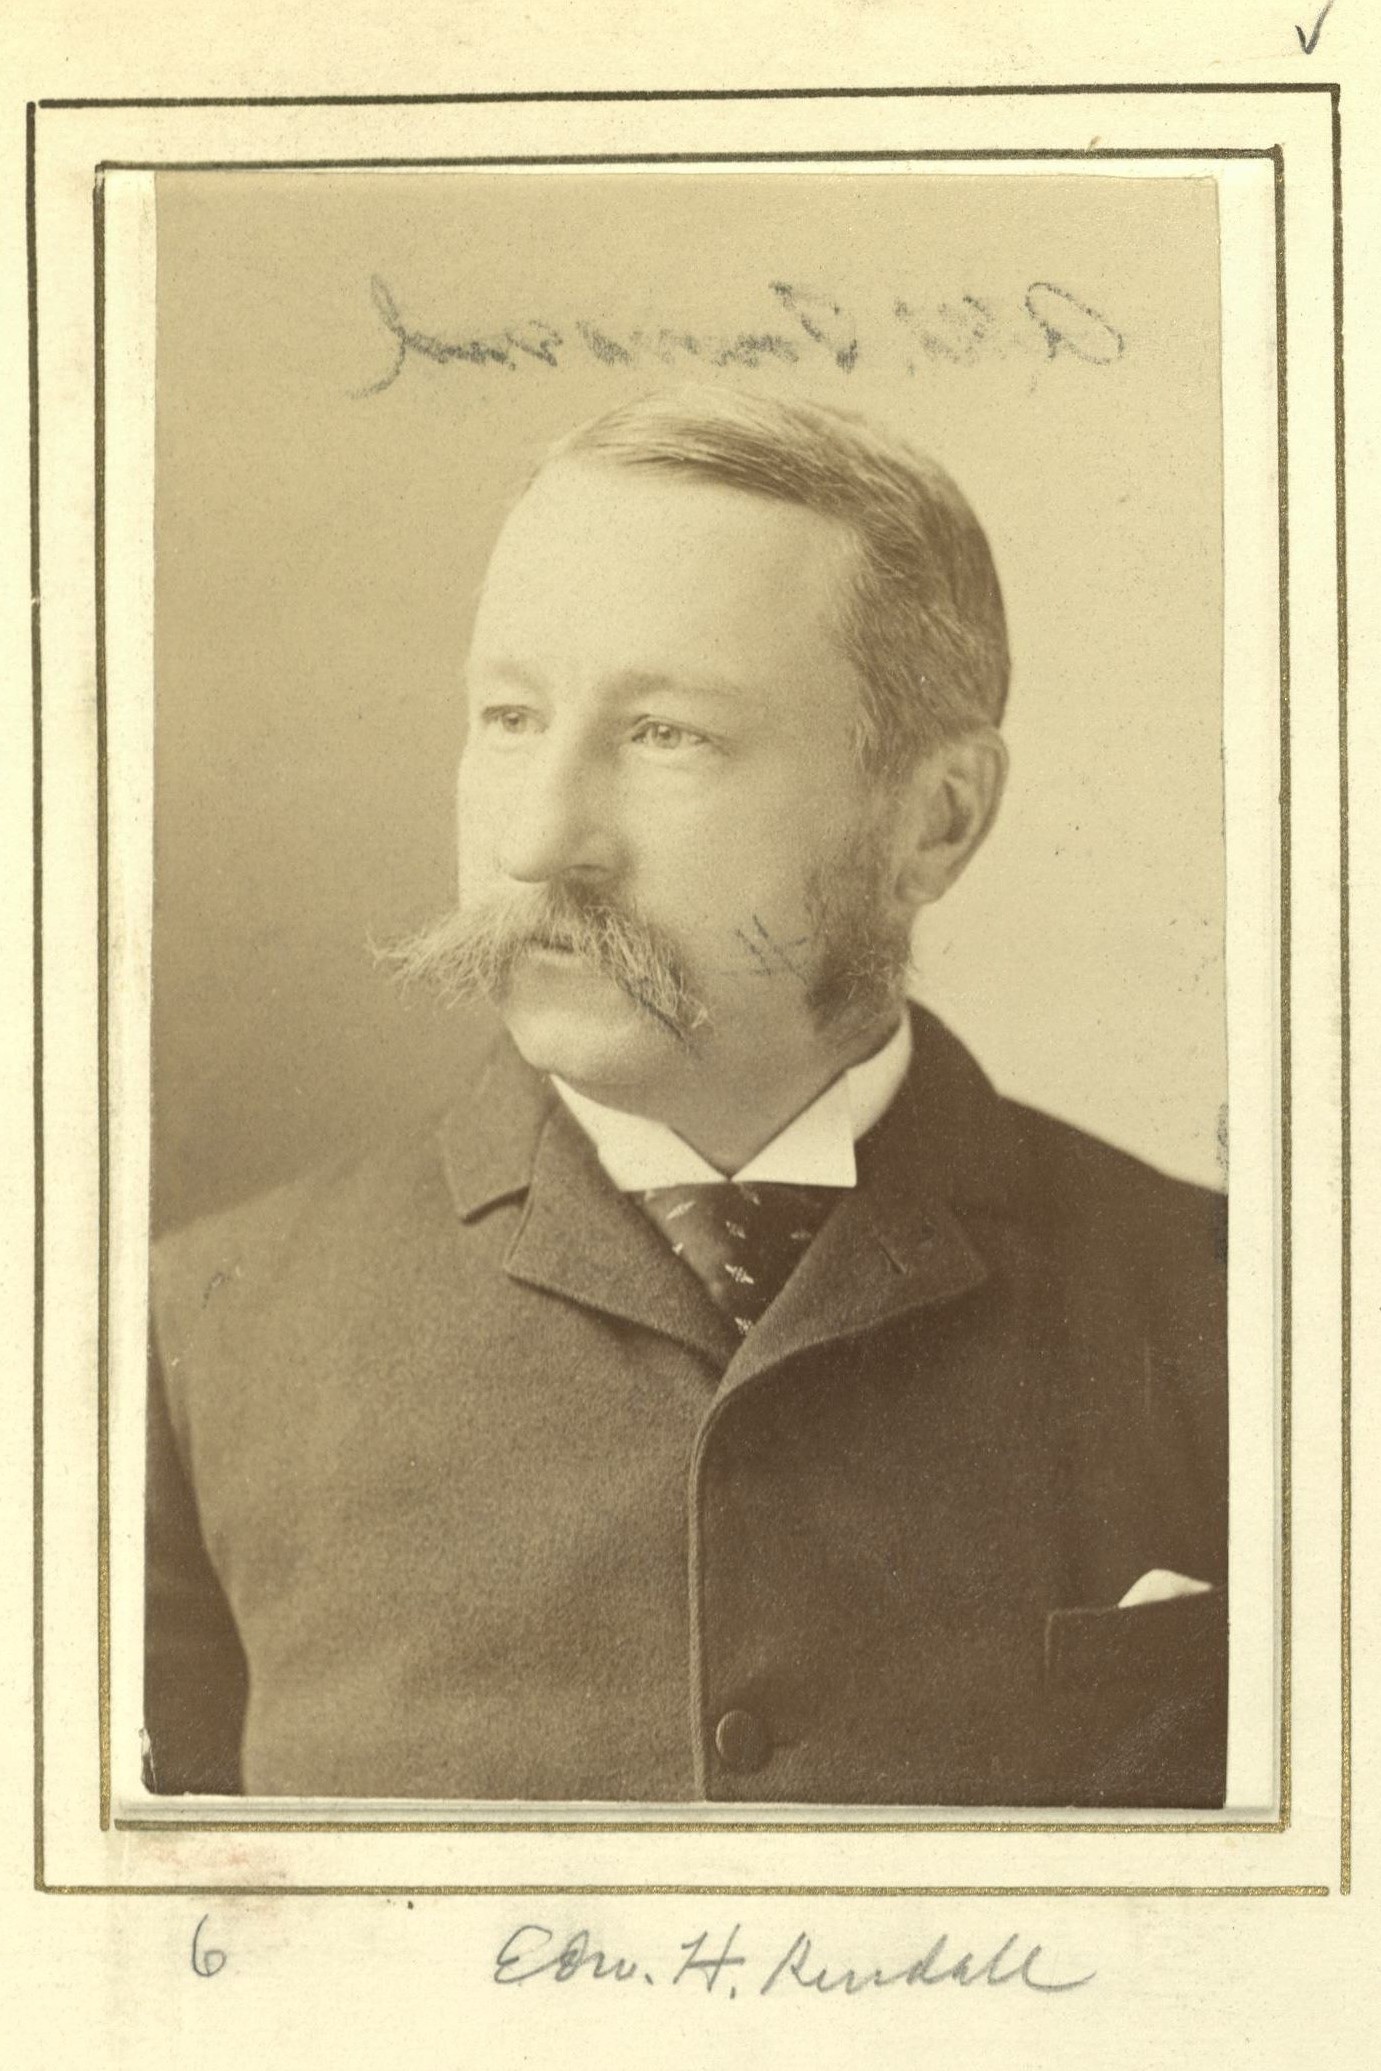 Member portrait of Edward H. Kendall